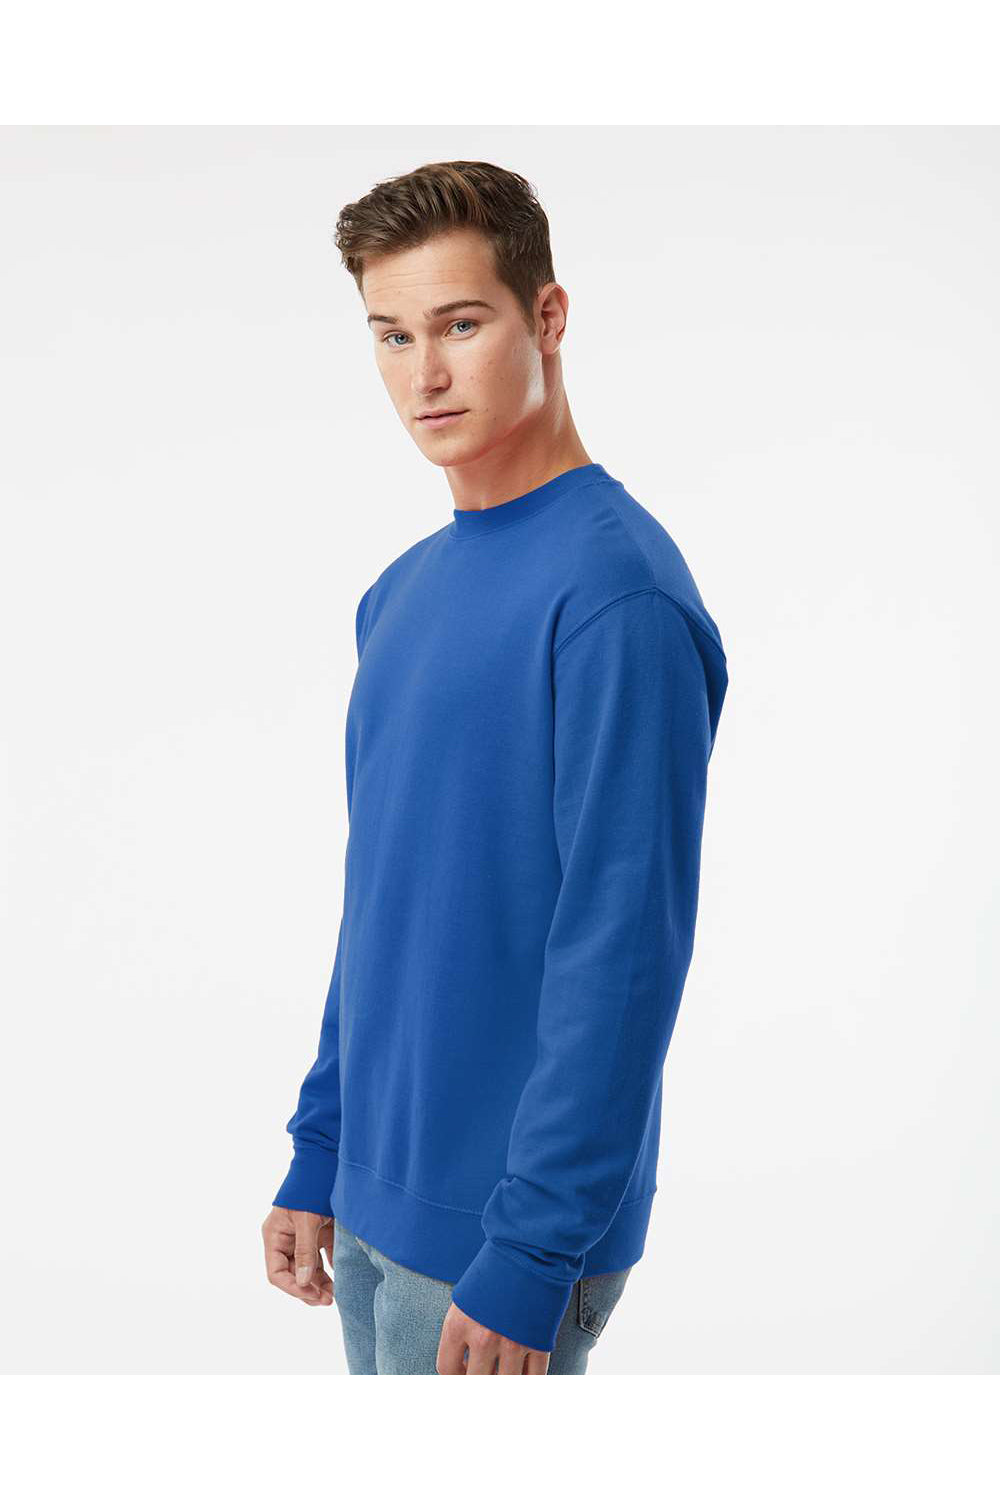 Independent Trading Co. SS3000 Mens Crewneck Sweatshirt Royal Blue Model Side